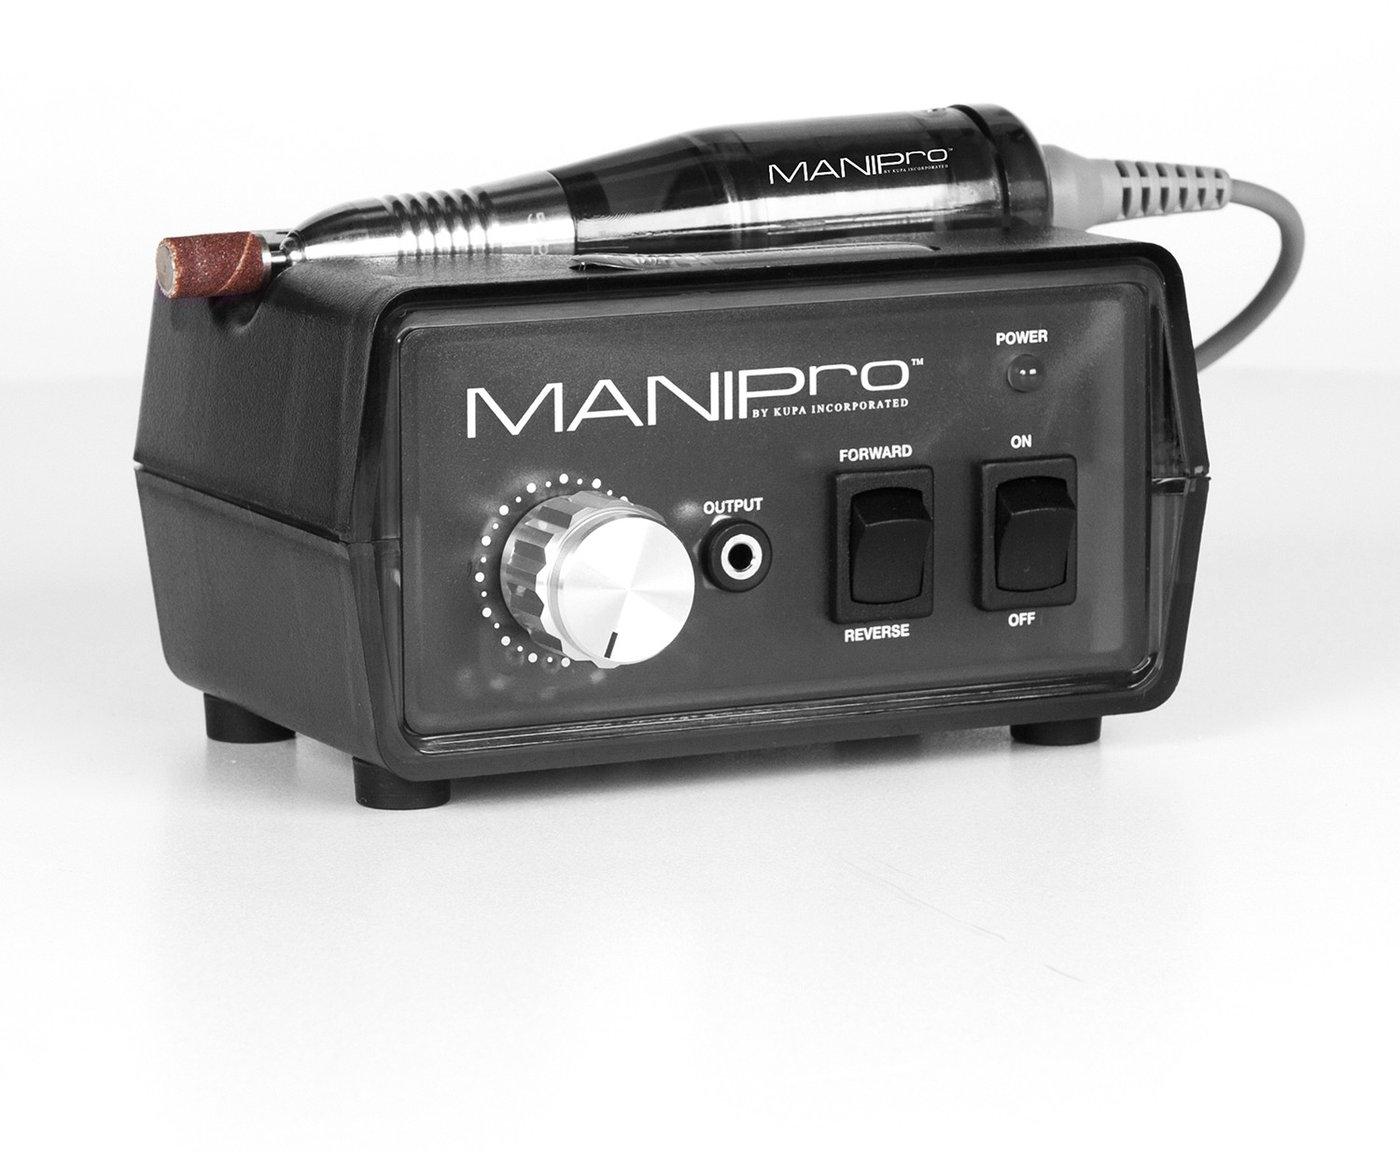 MANIPro Original (Licorice) Electric Nail File Bundle